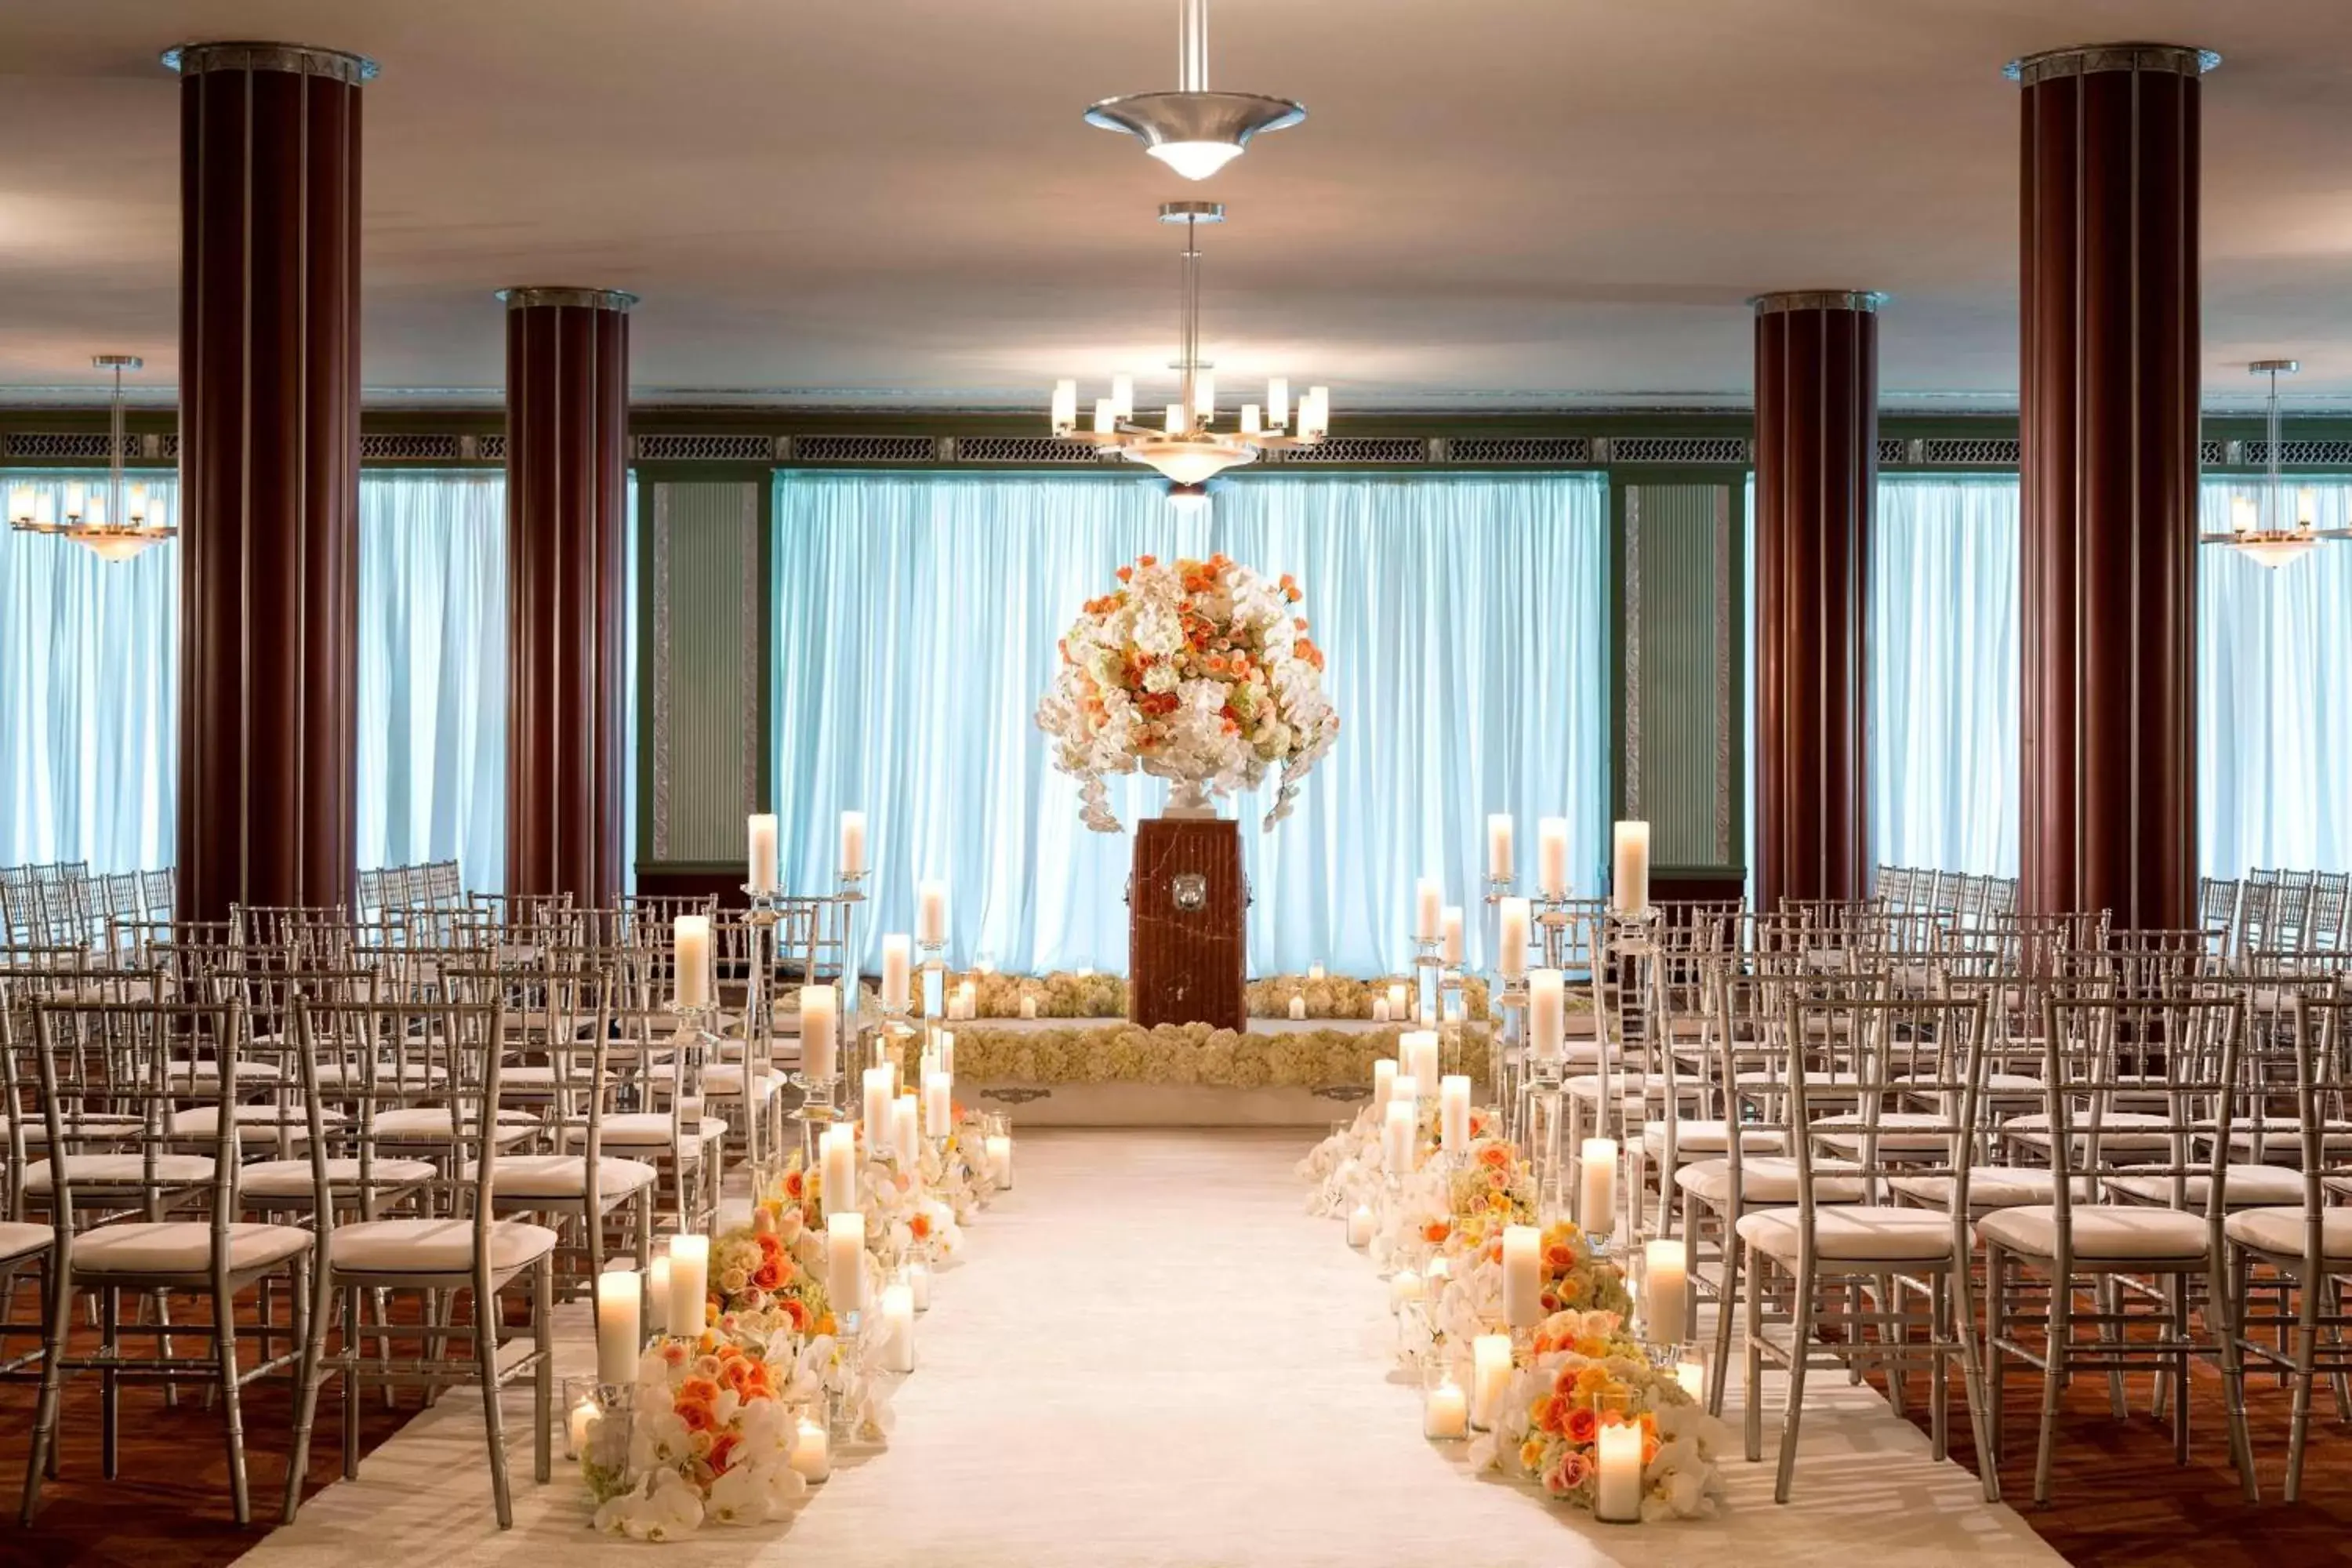 Banquet/Function facilities, Banquet Facilities in The Ritz-Carlton, Cleveland